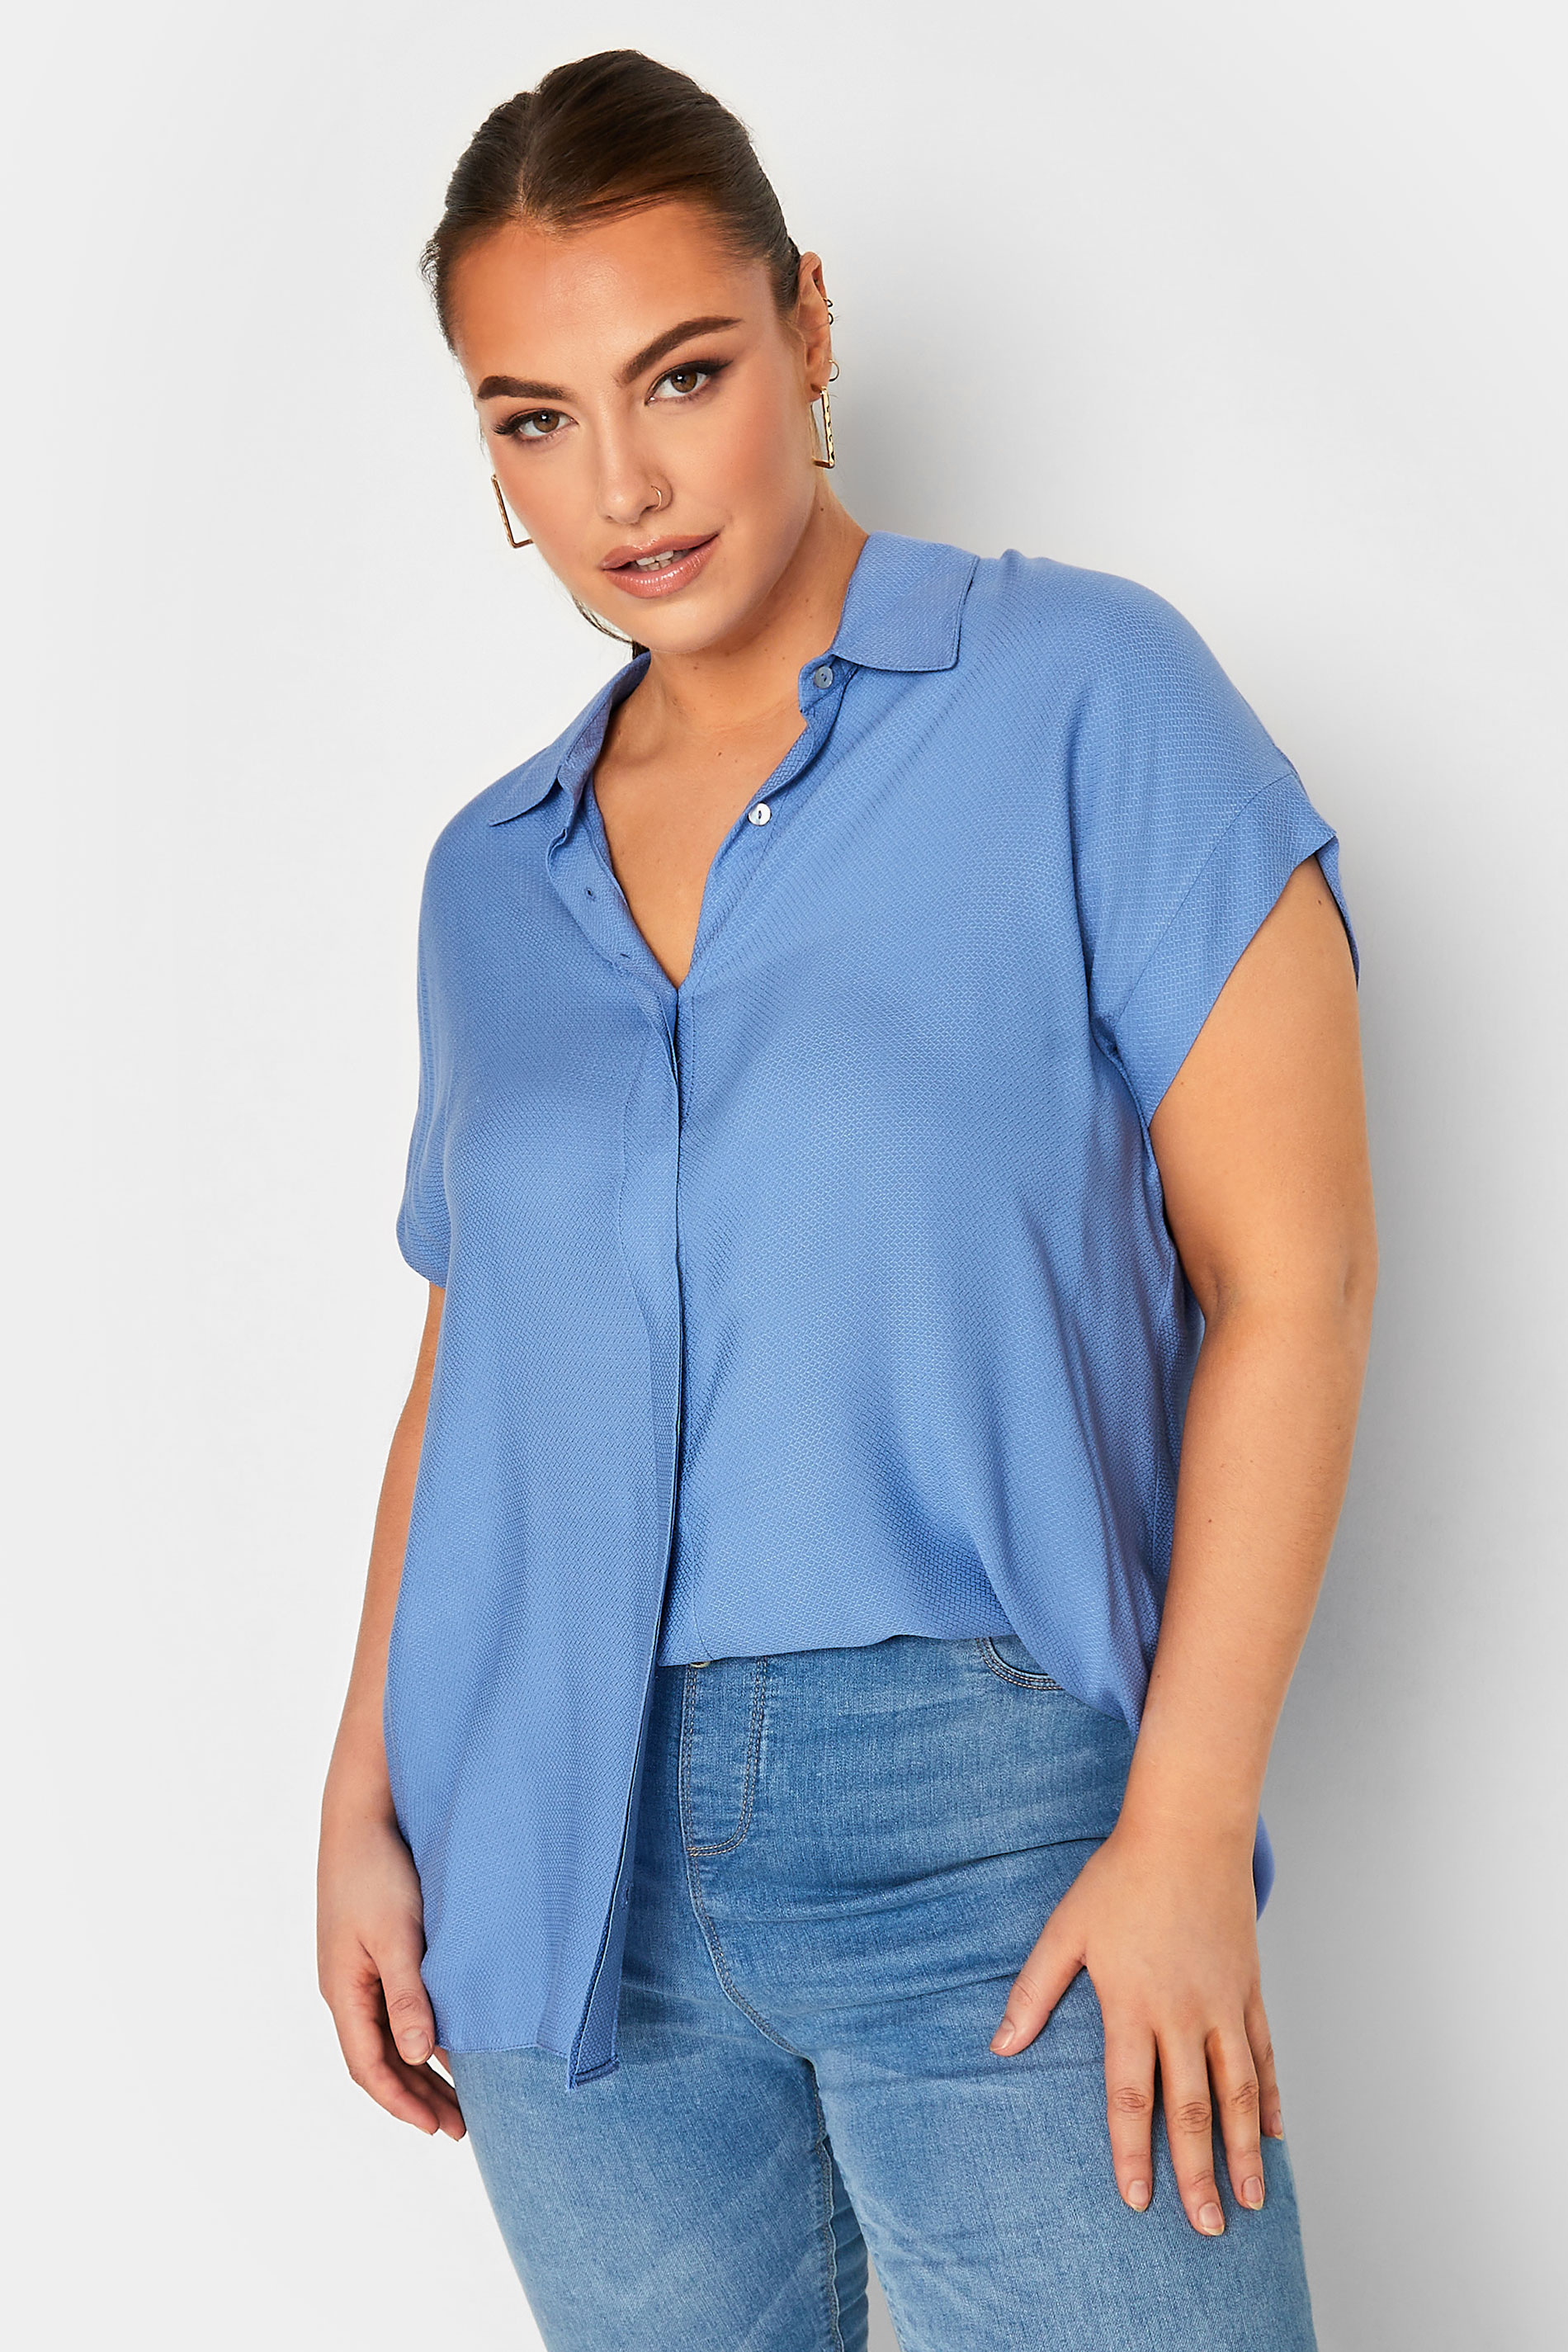 YOURS Plus Size Blue Short Sleeve Shirt | Yours Clothing 1